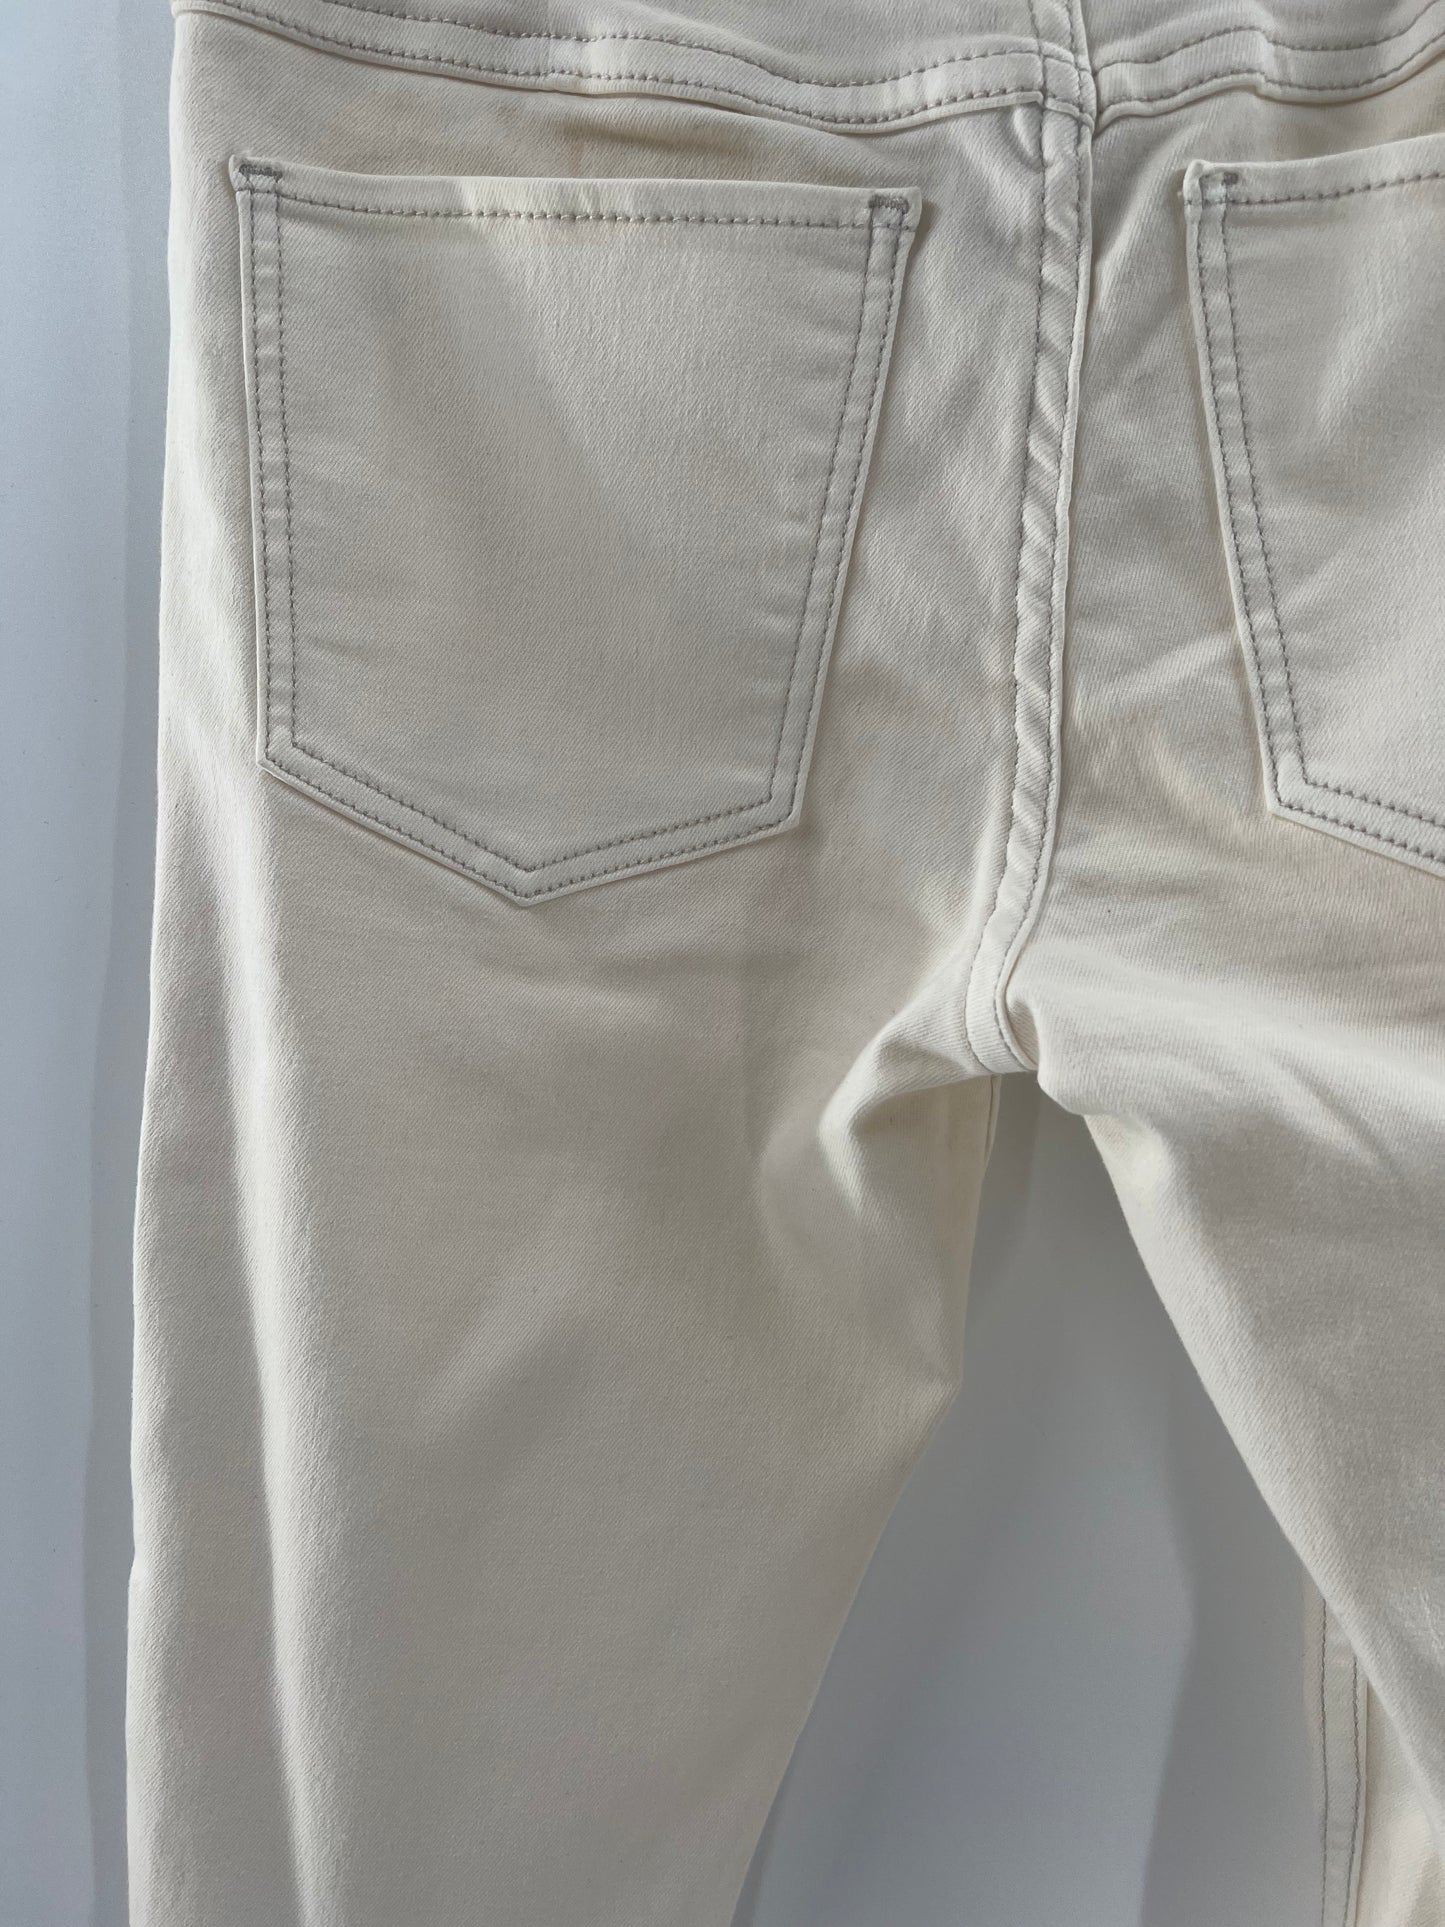 Free People White Elastic Flare Pants (Size W 25)